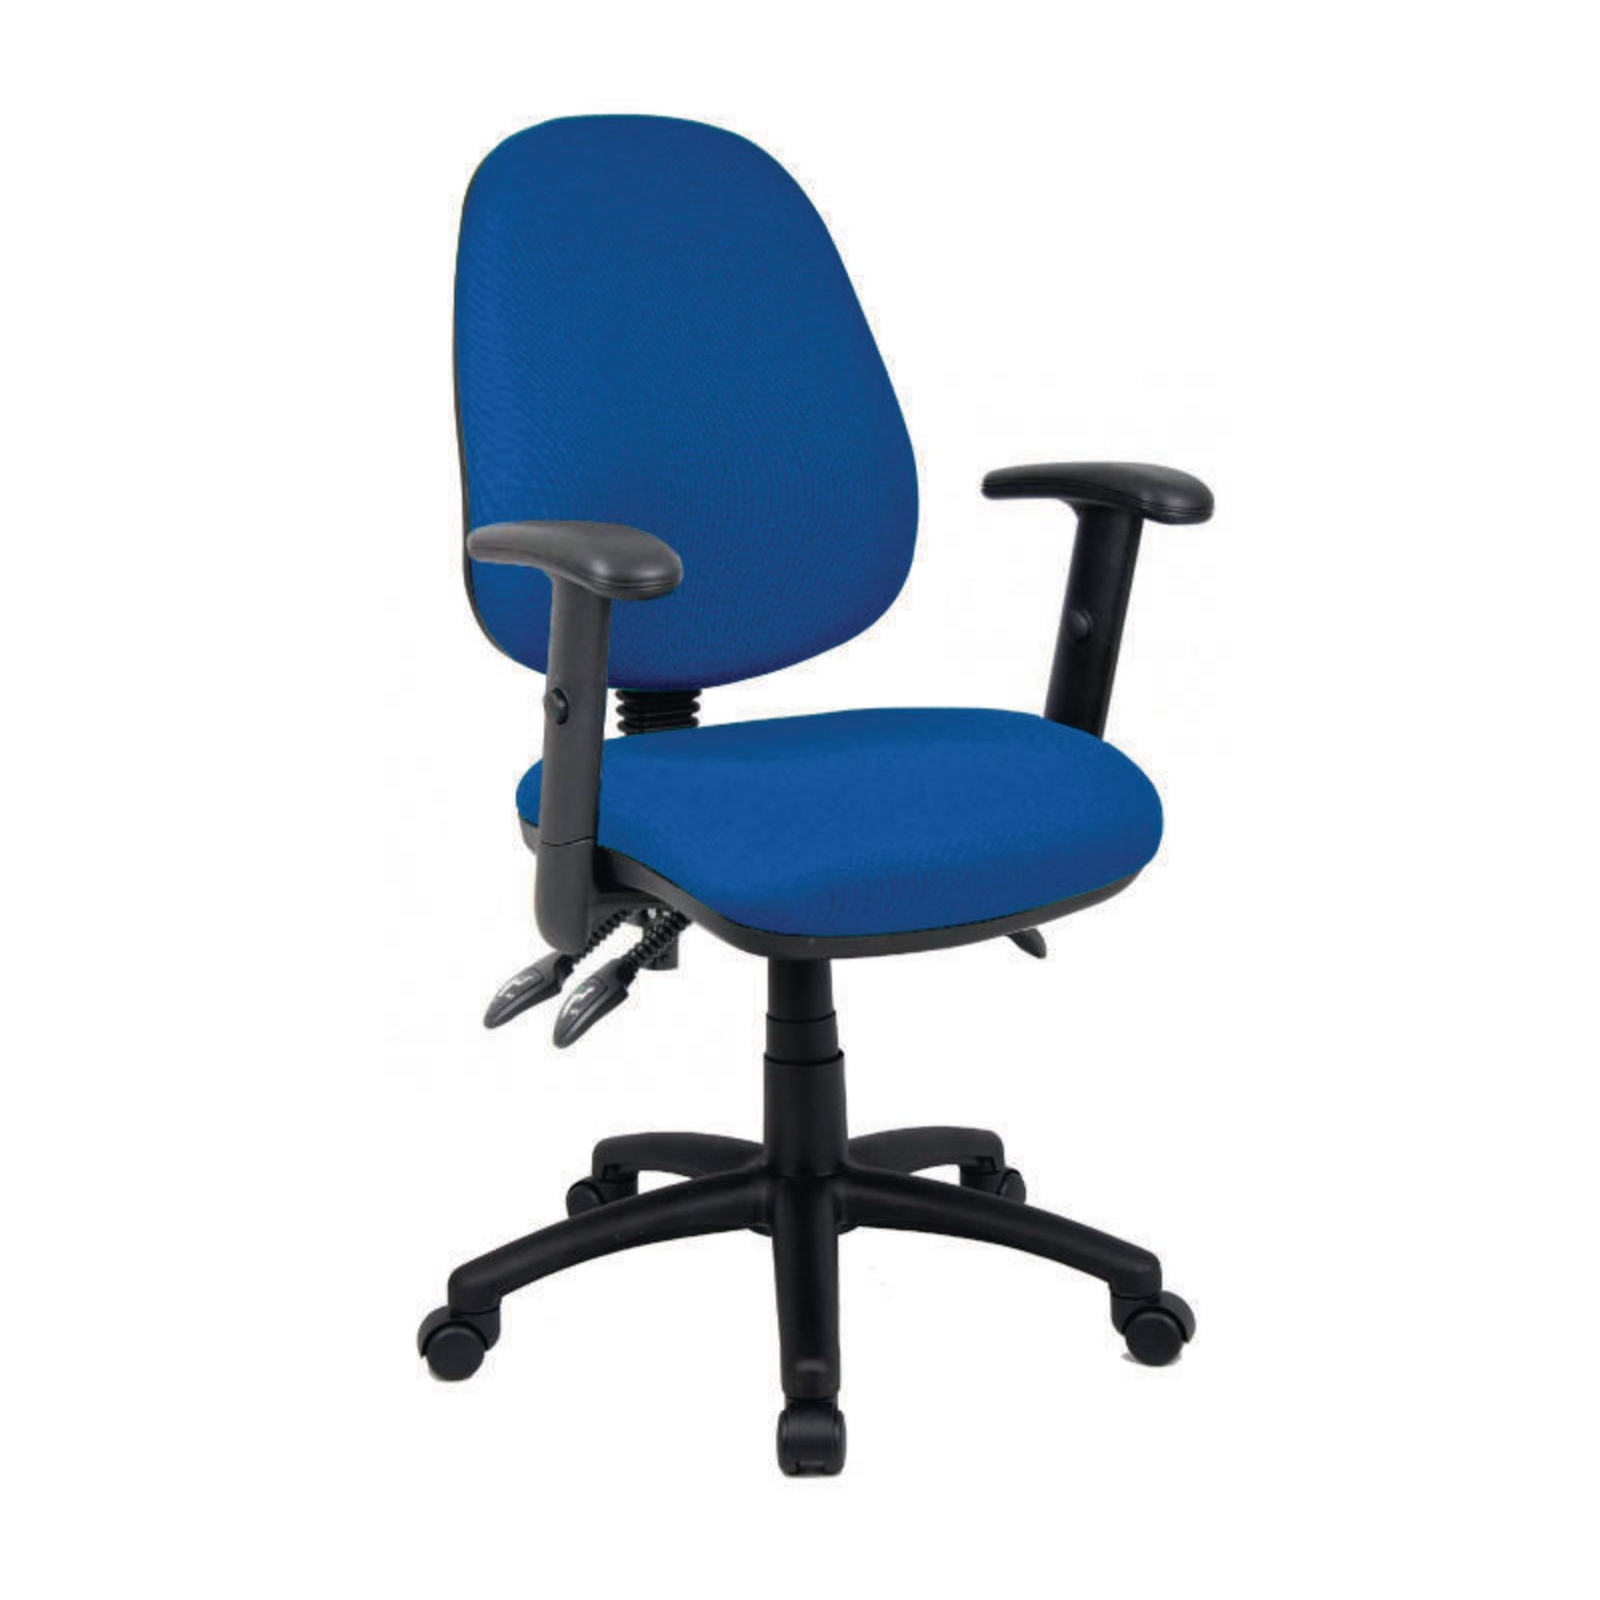 Vantage 3 Lever Adjust Arms Chair Blue